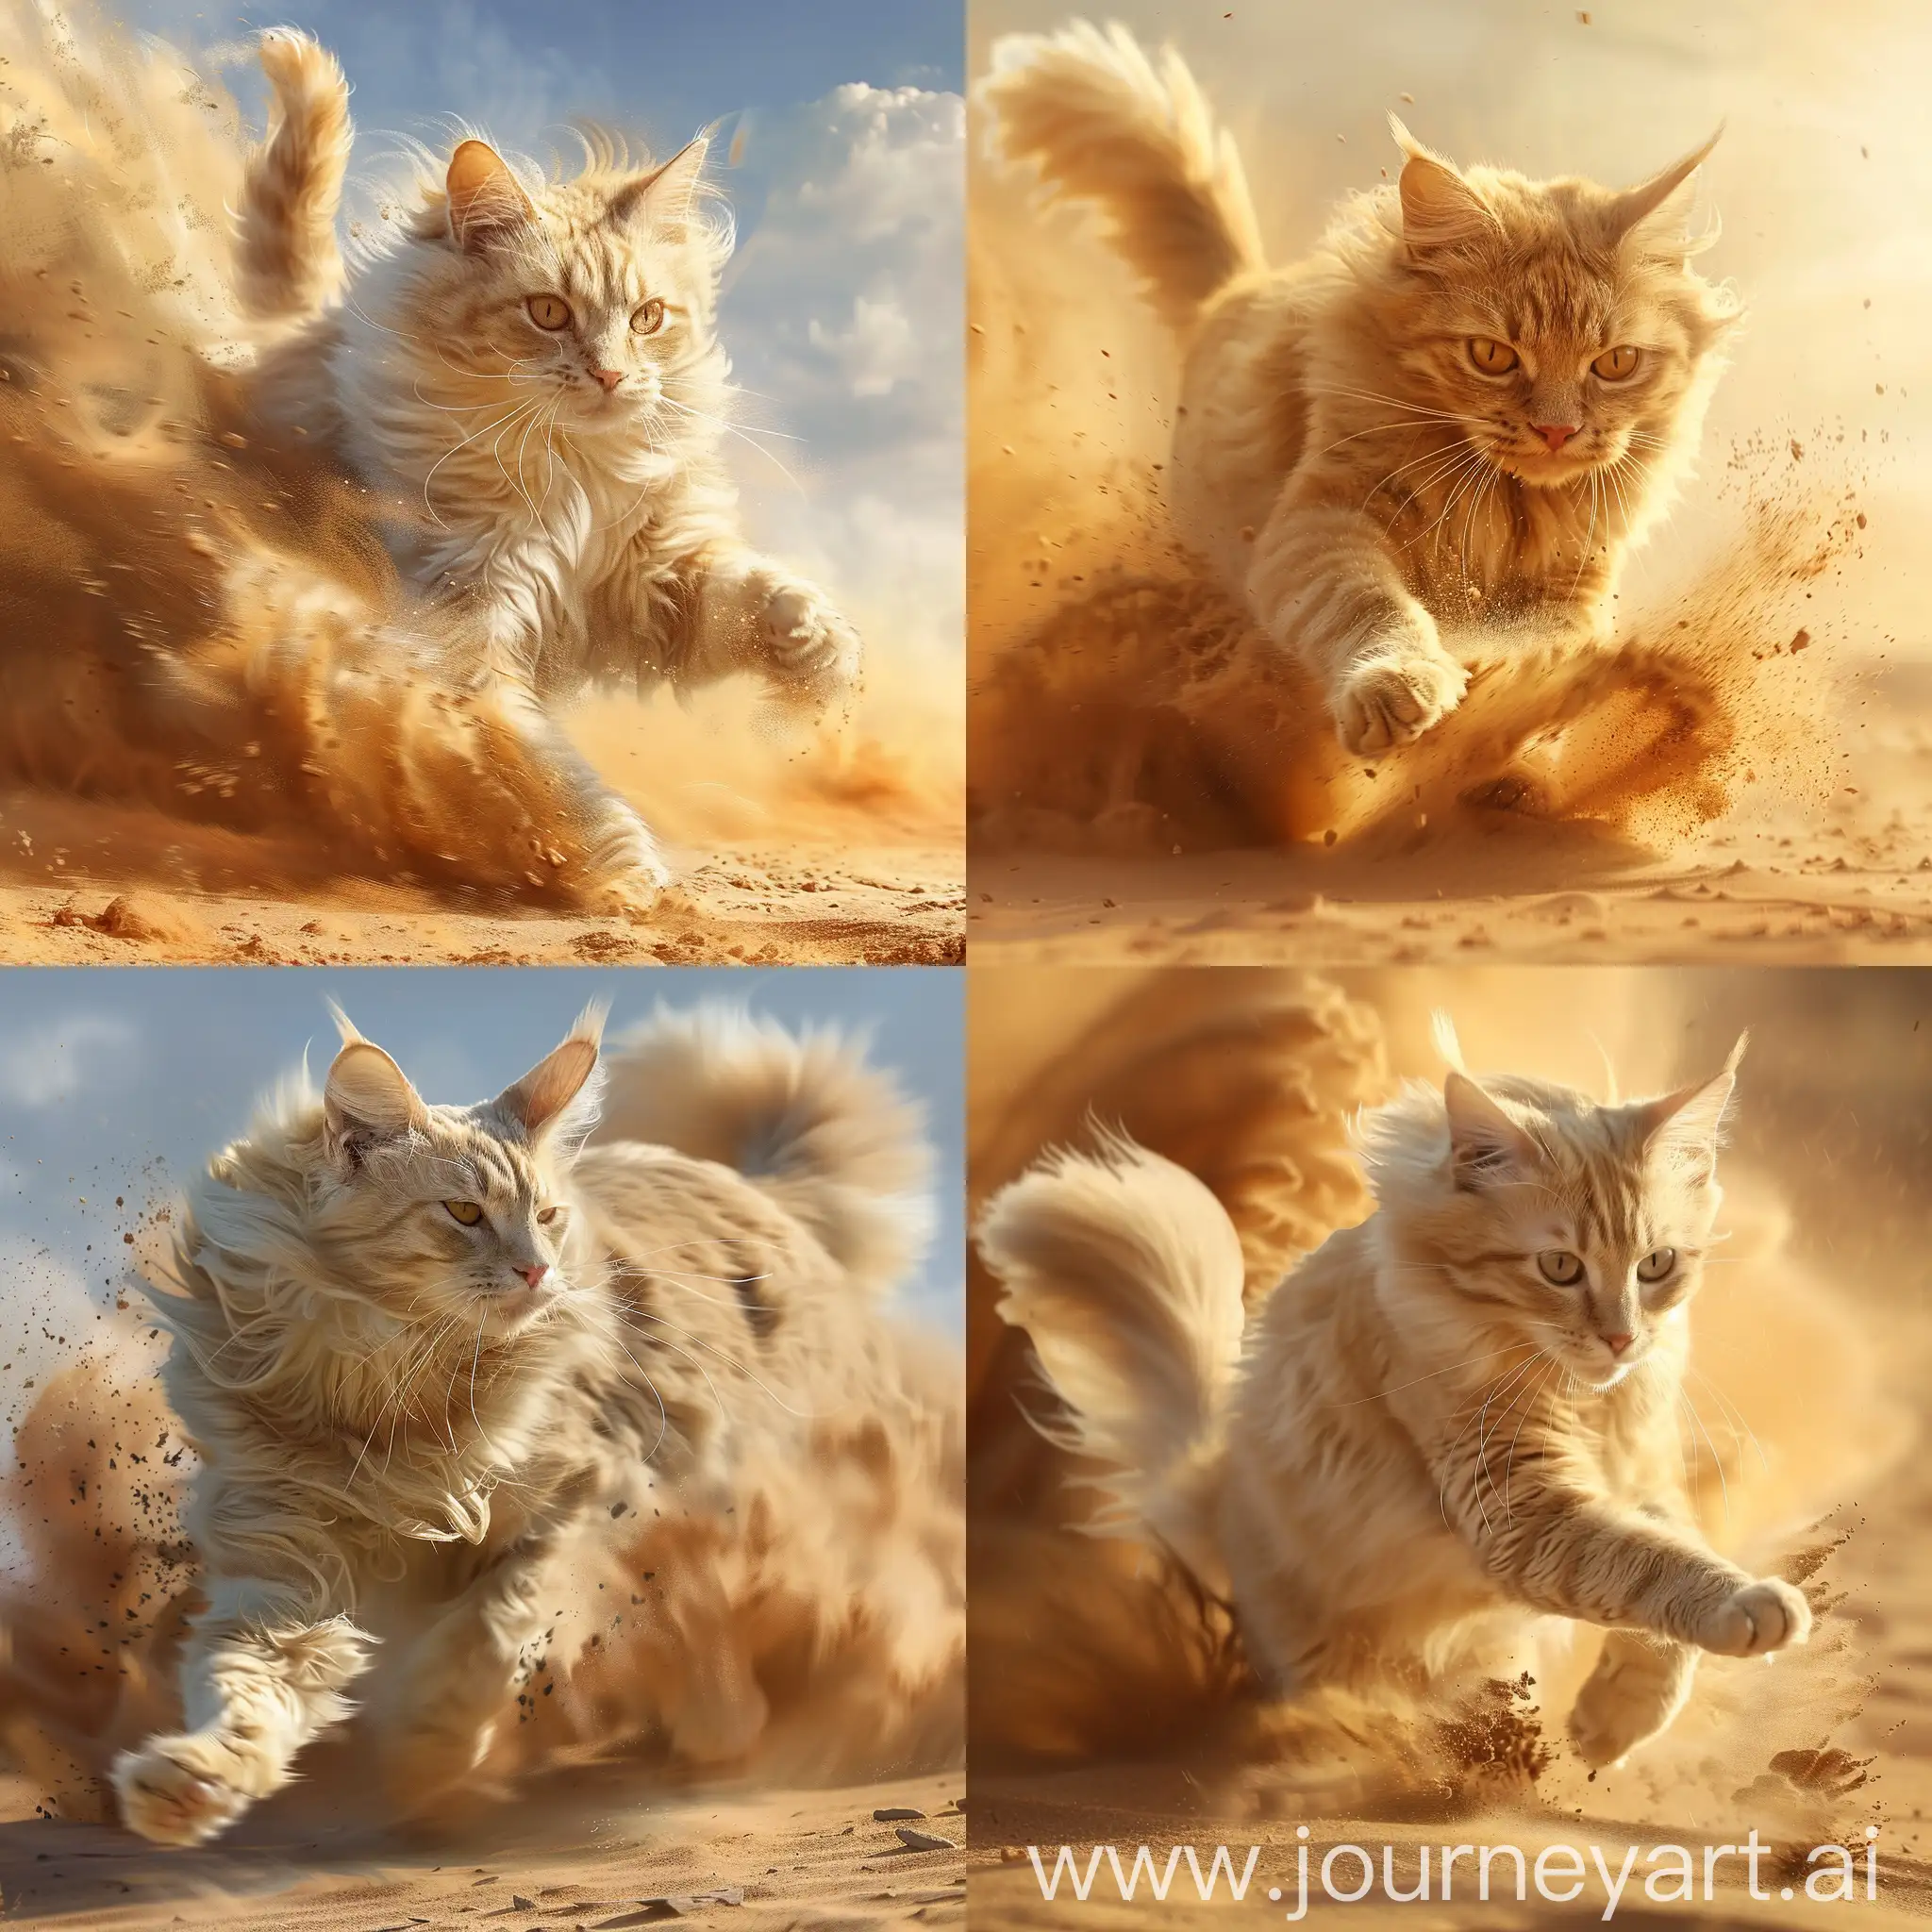 https://i.imgur.com/24QUFp9.jpeg, 
Realistic sprinter yellow Turkish Angora cat, running in the desert, causing sandstorm wherever he goes, front image capture